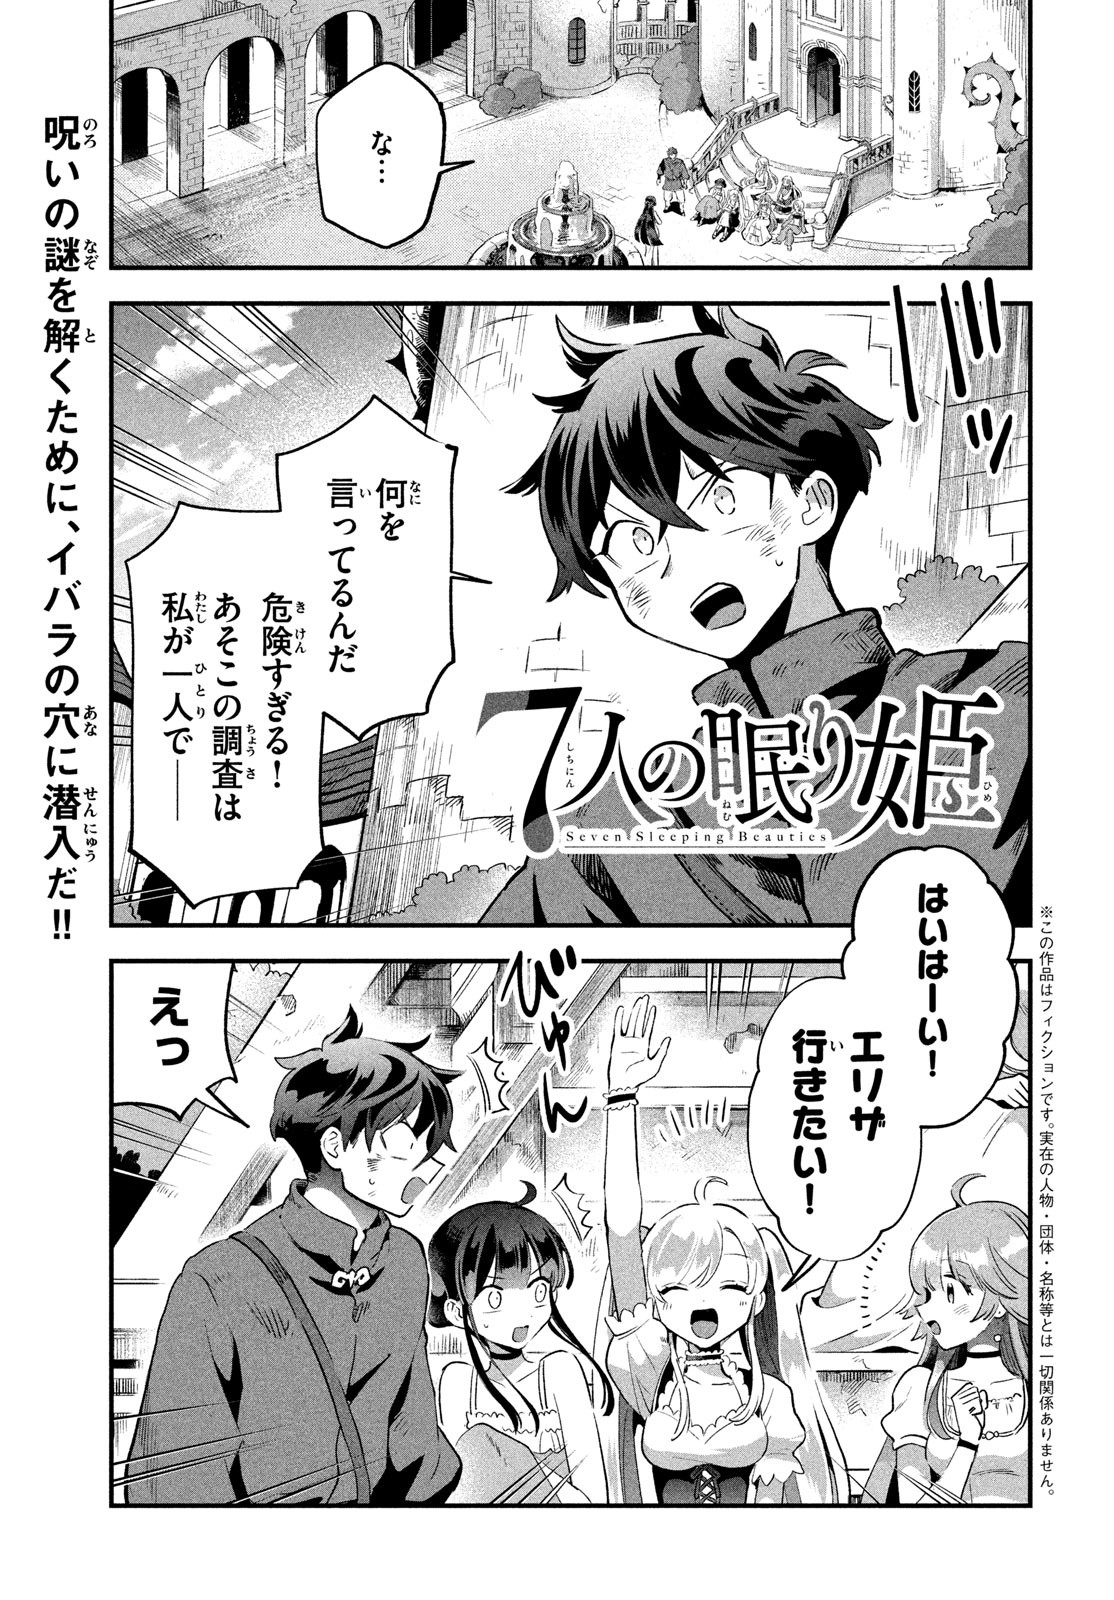 7-nin no Nemuri Hime - Chapter 26 - Page 1